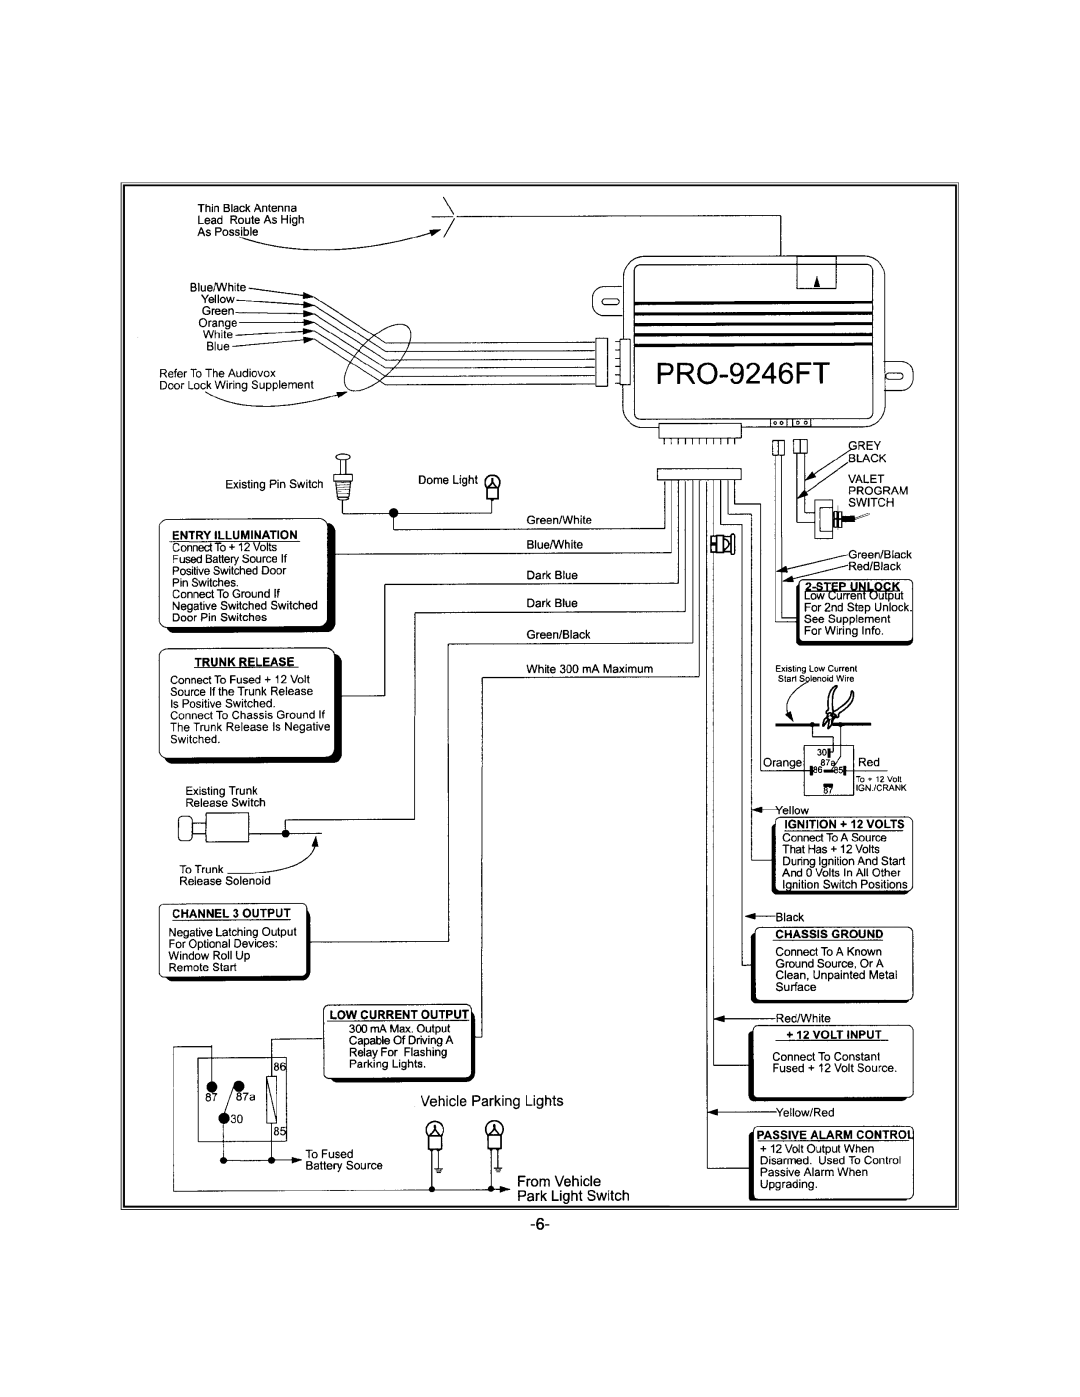 Audiovox PRO 9246FT installation manual 